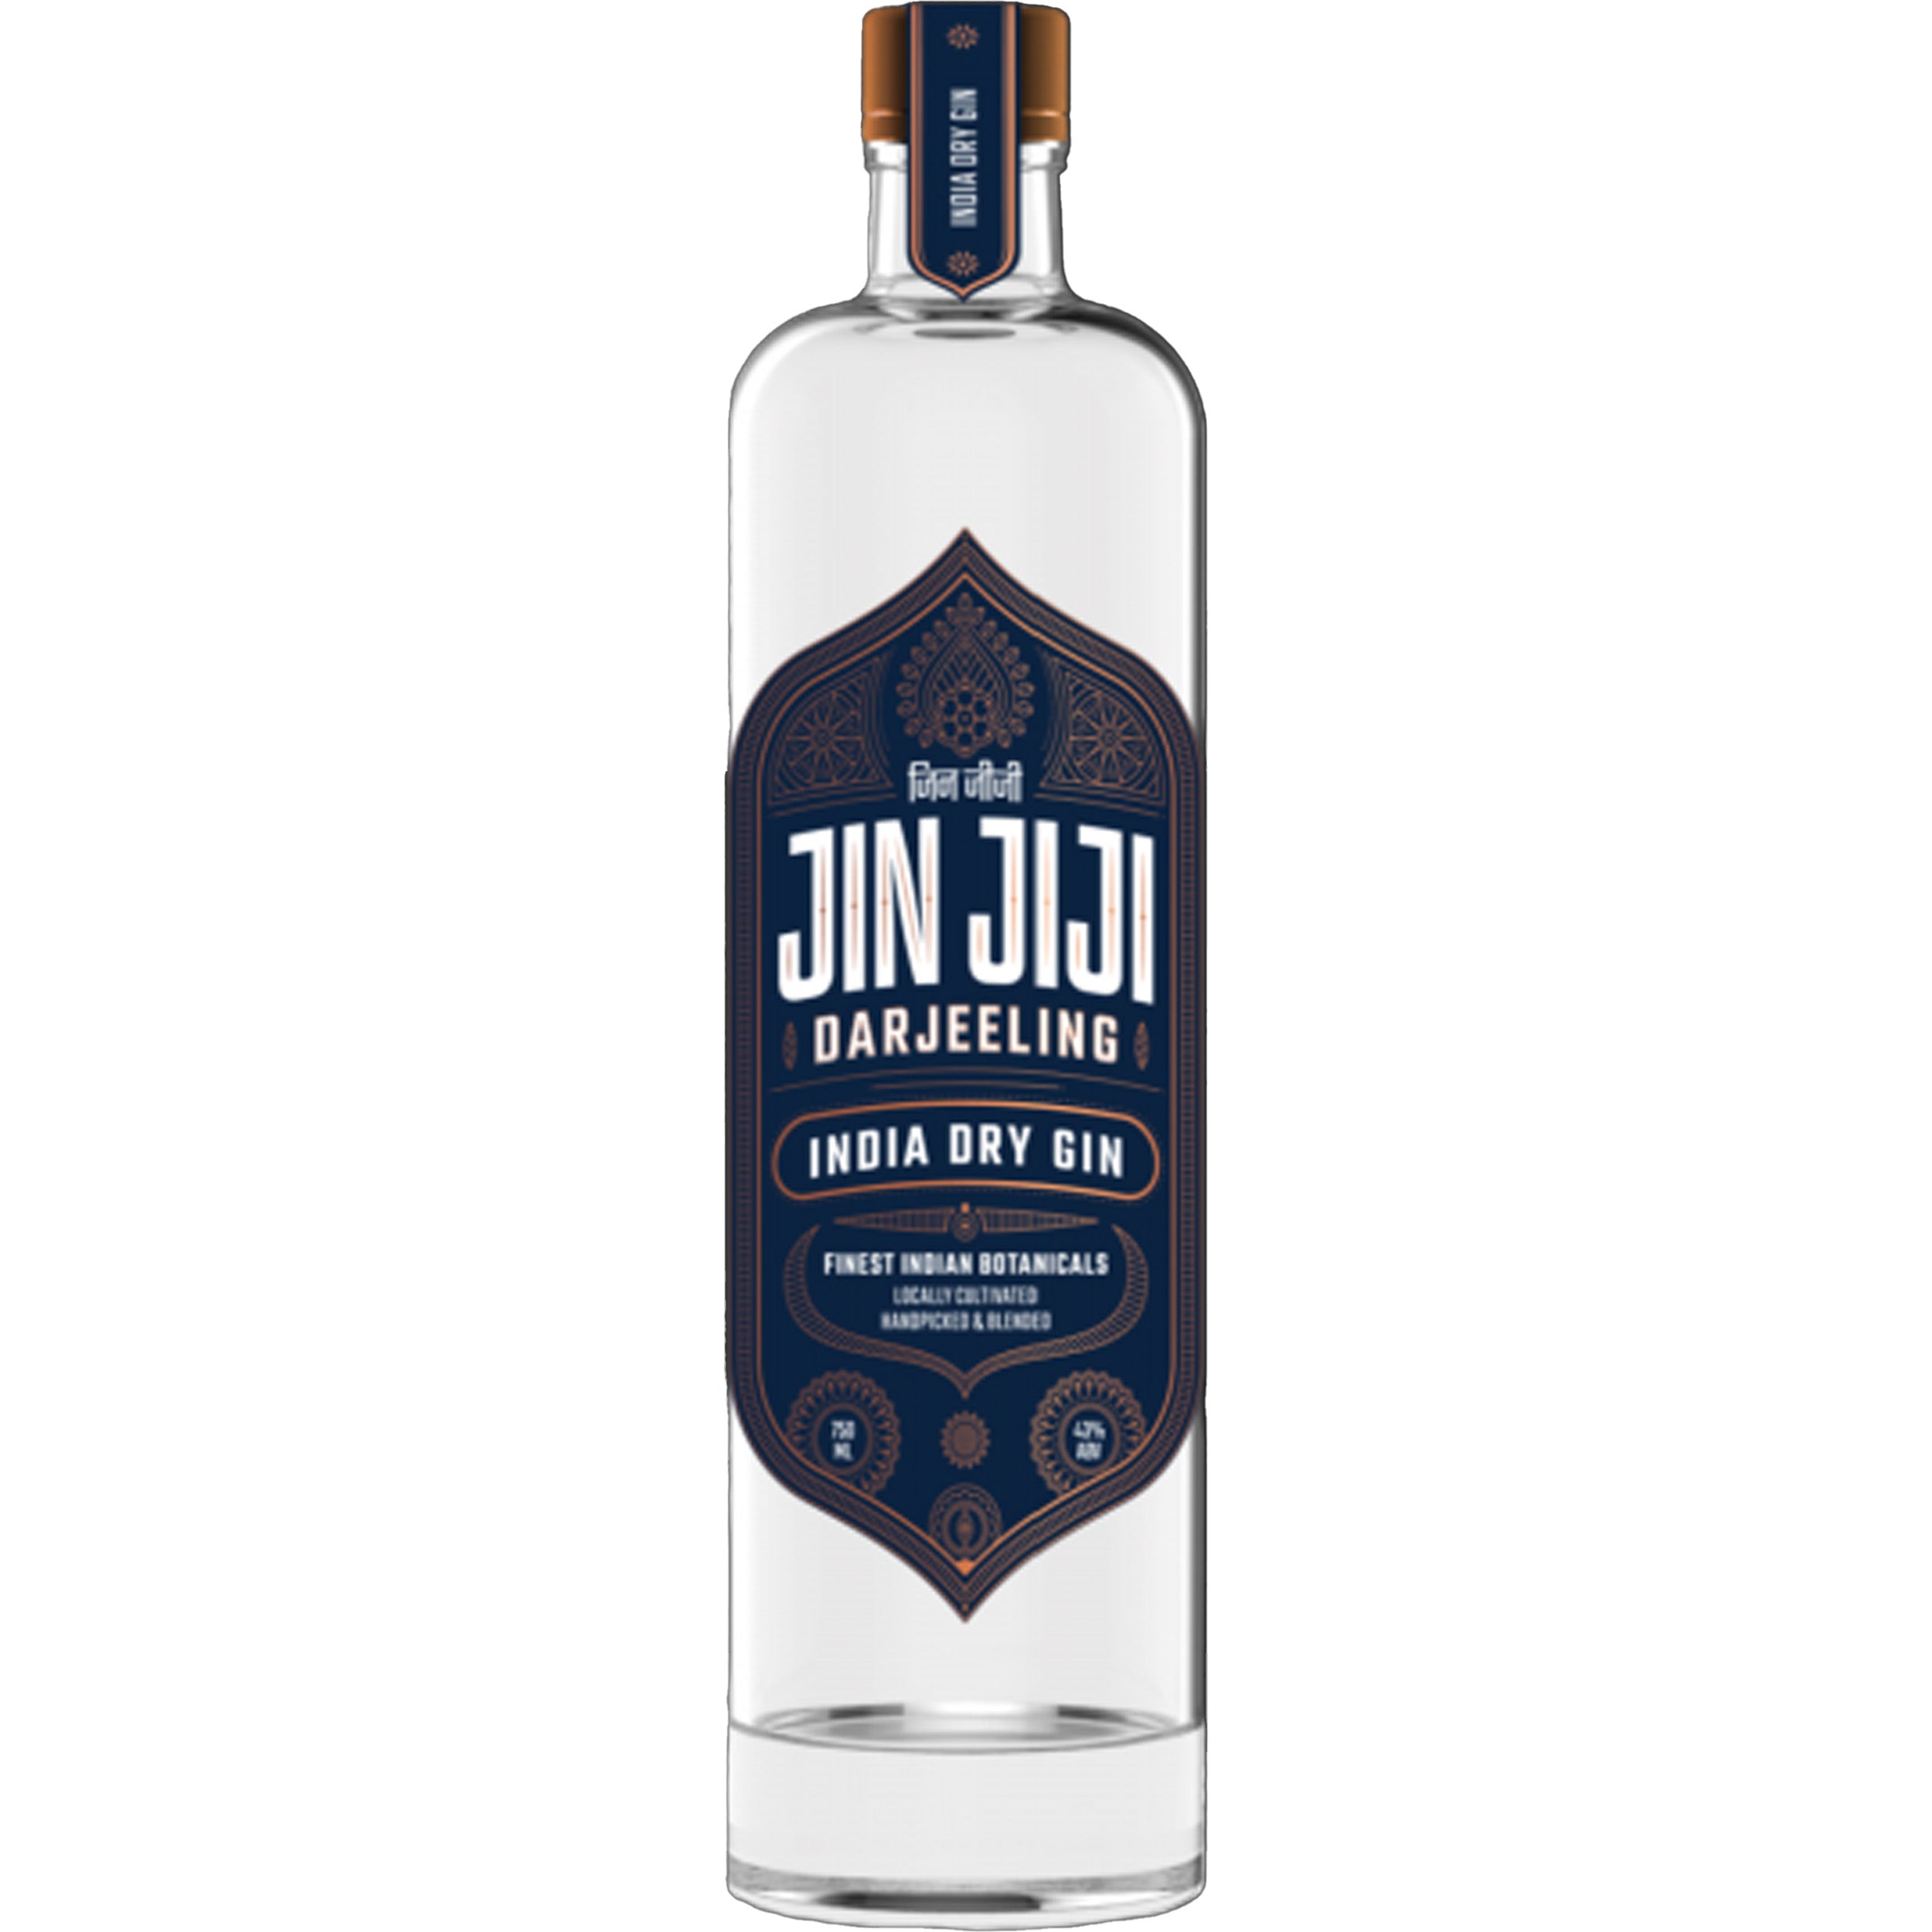 Jin Jiji Darjeeling India Chips Gin – Liquor Dry